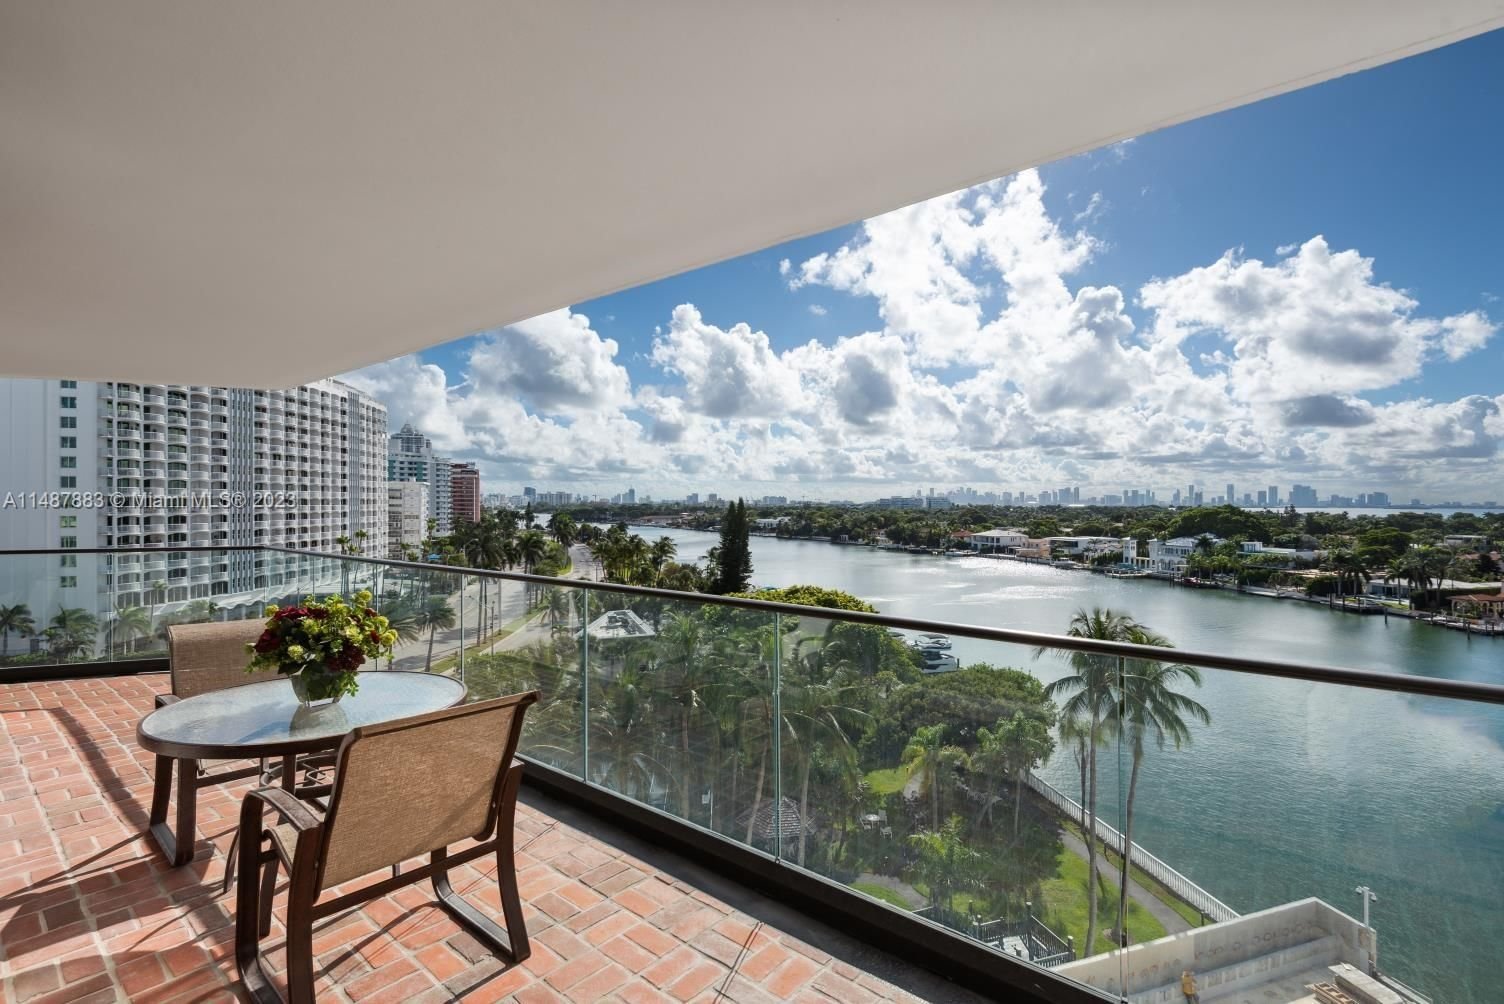 Real estate property located at 5500 Collins Ave #904, Miami-Dade County, Miami Beach, FL